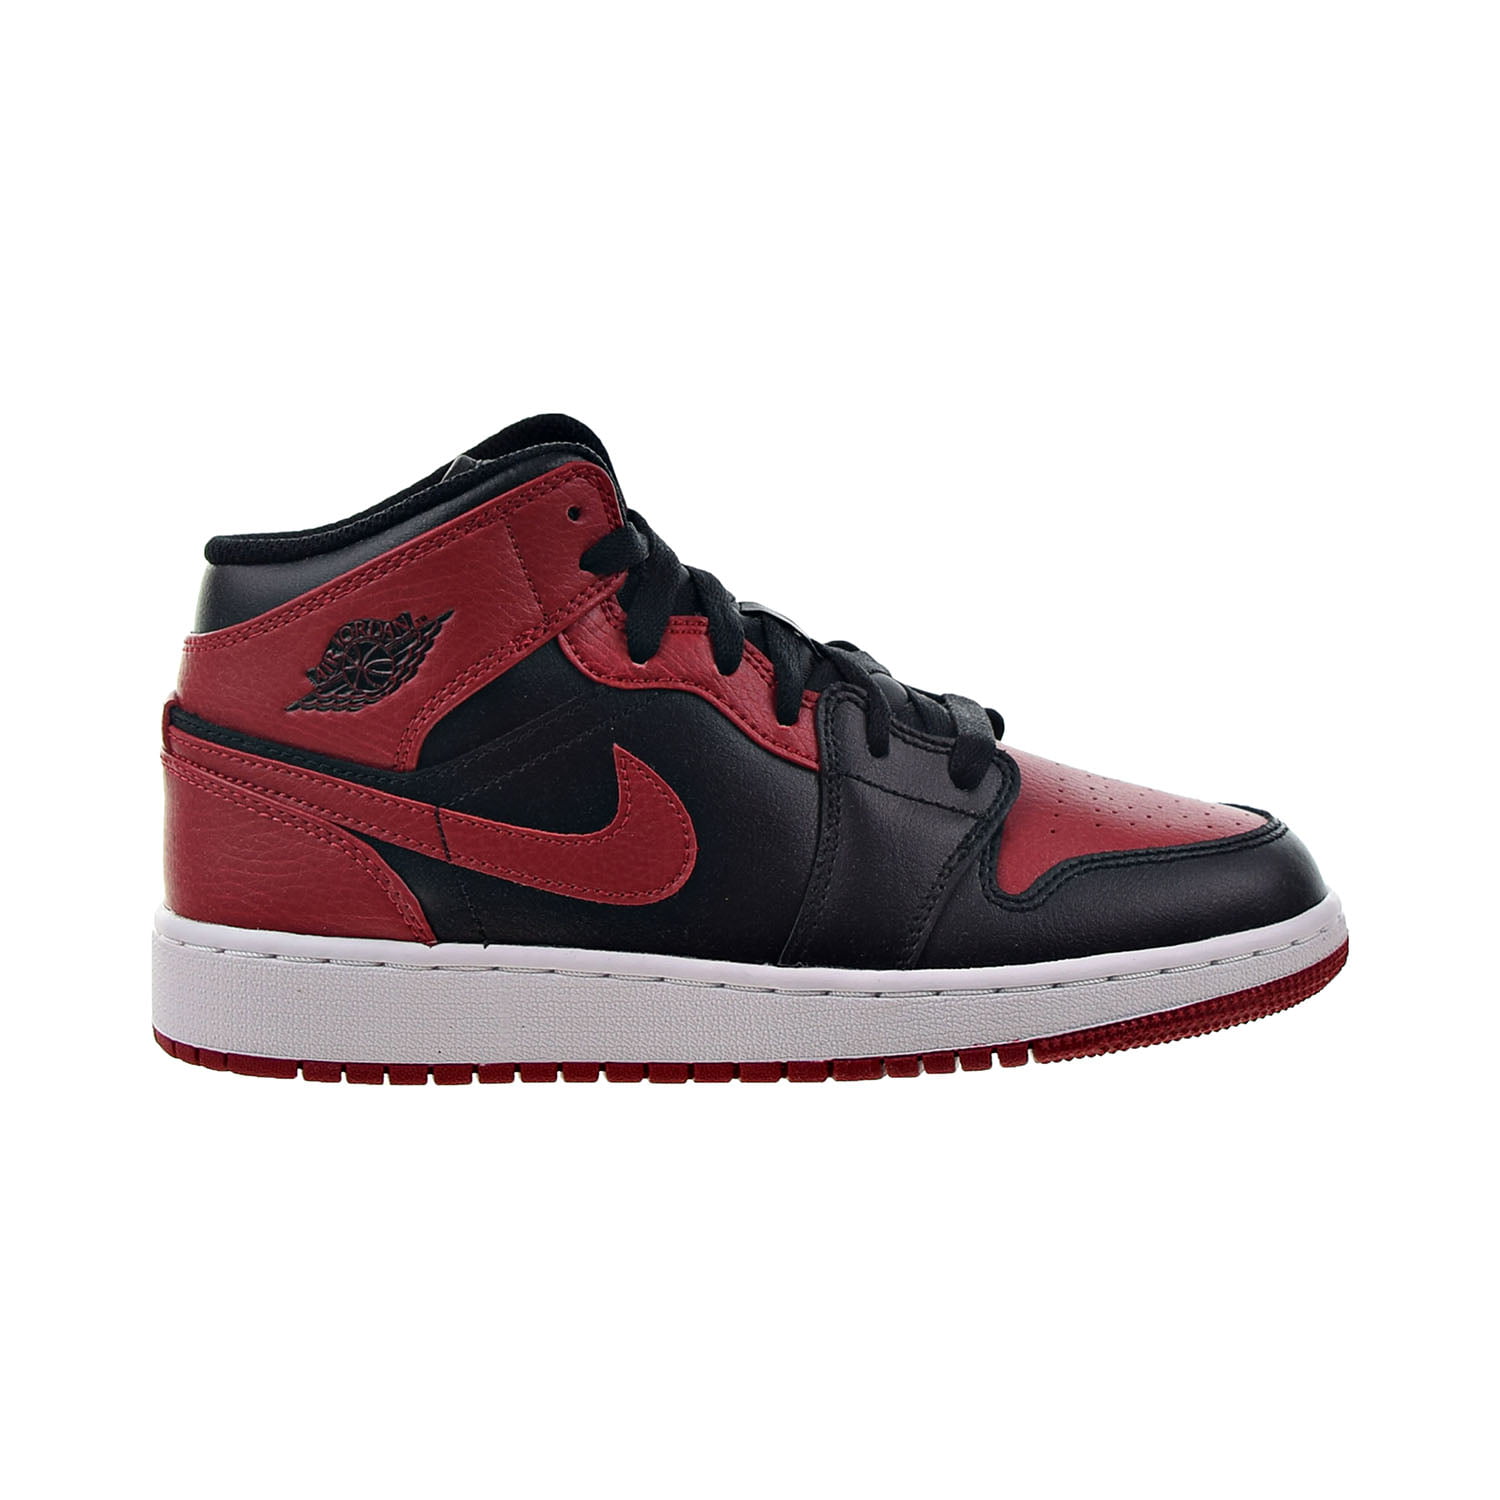 Air Jordan Mid Kids' Shoes Black-Gym Red-White Noir 554725-074 - Walmart.com